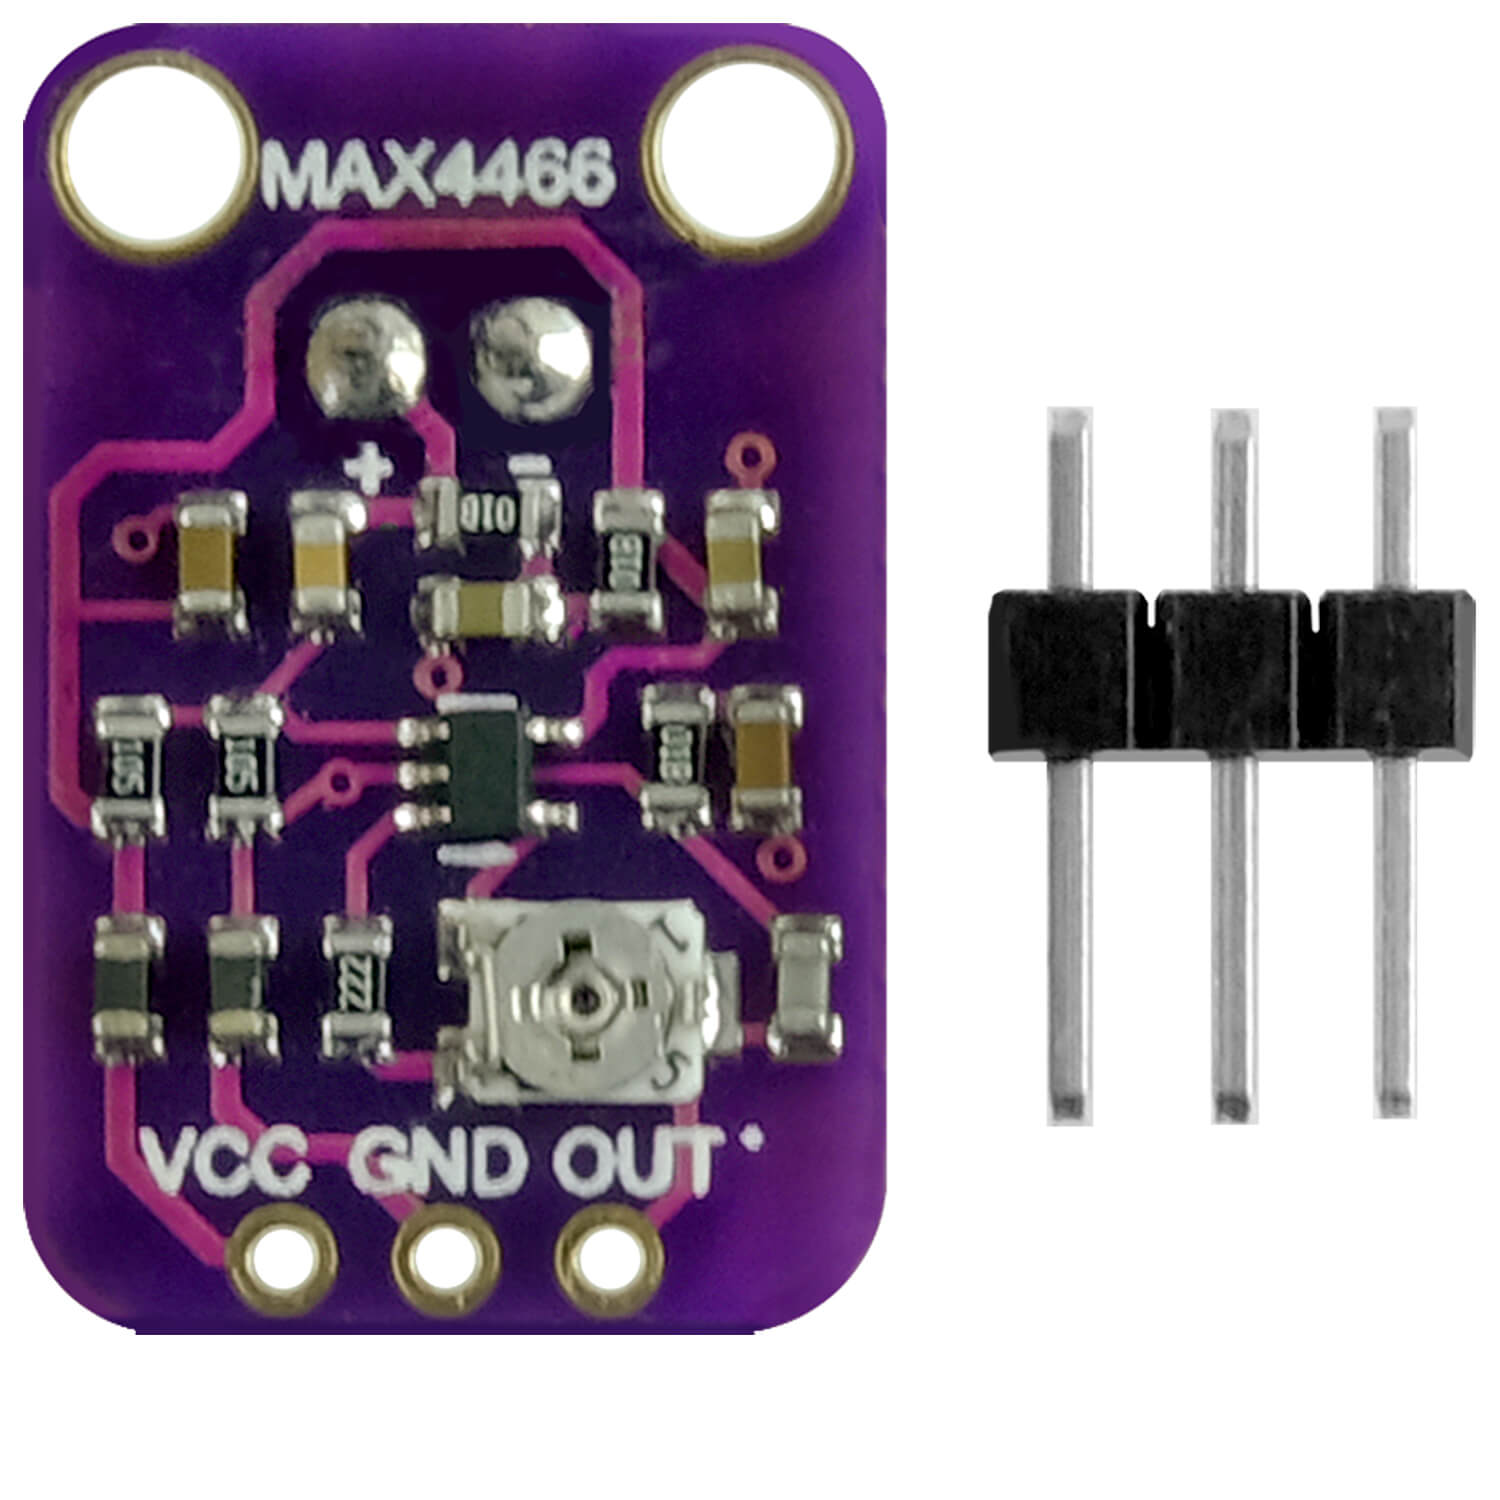 GY-MAX4466 Elektret Mikrofon, Verstärker Breakout Sensor - kompatibel mit Arduino und Raspberry Pi - AZ-Delivery